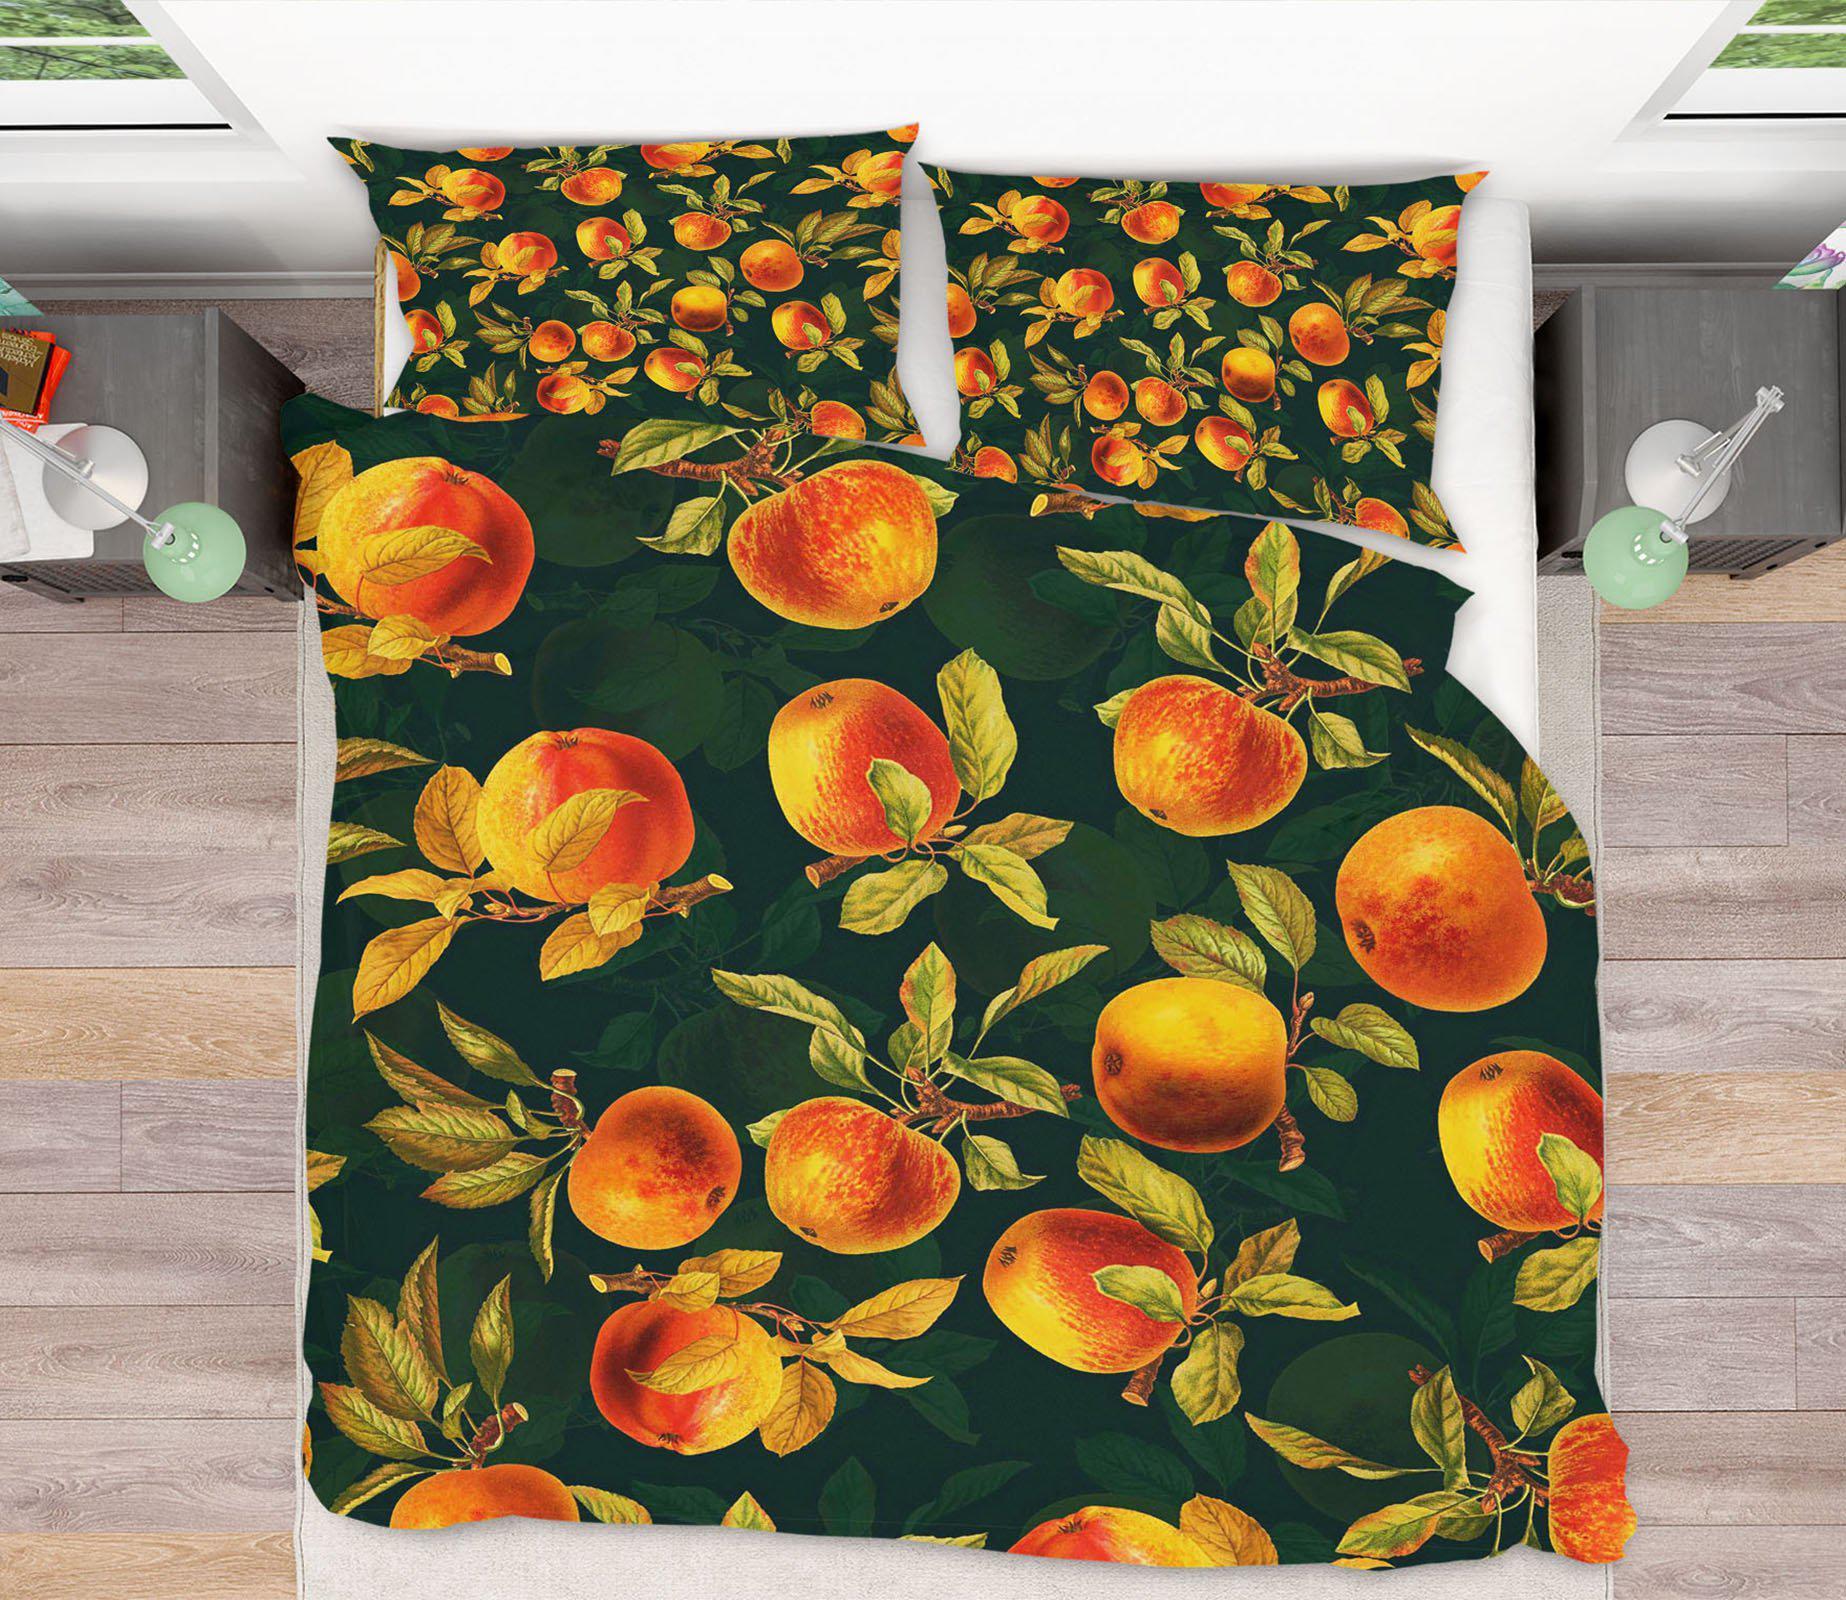 3D Red Apple 165 Uta Naumann Bedding Quilt Cover Set Bedding Set Pillowcases 3D Duvet cover